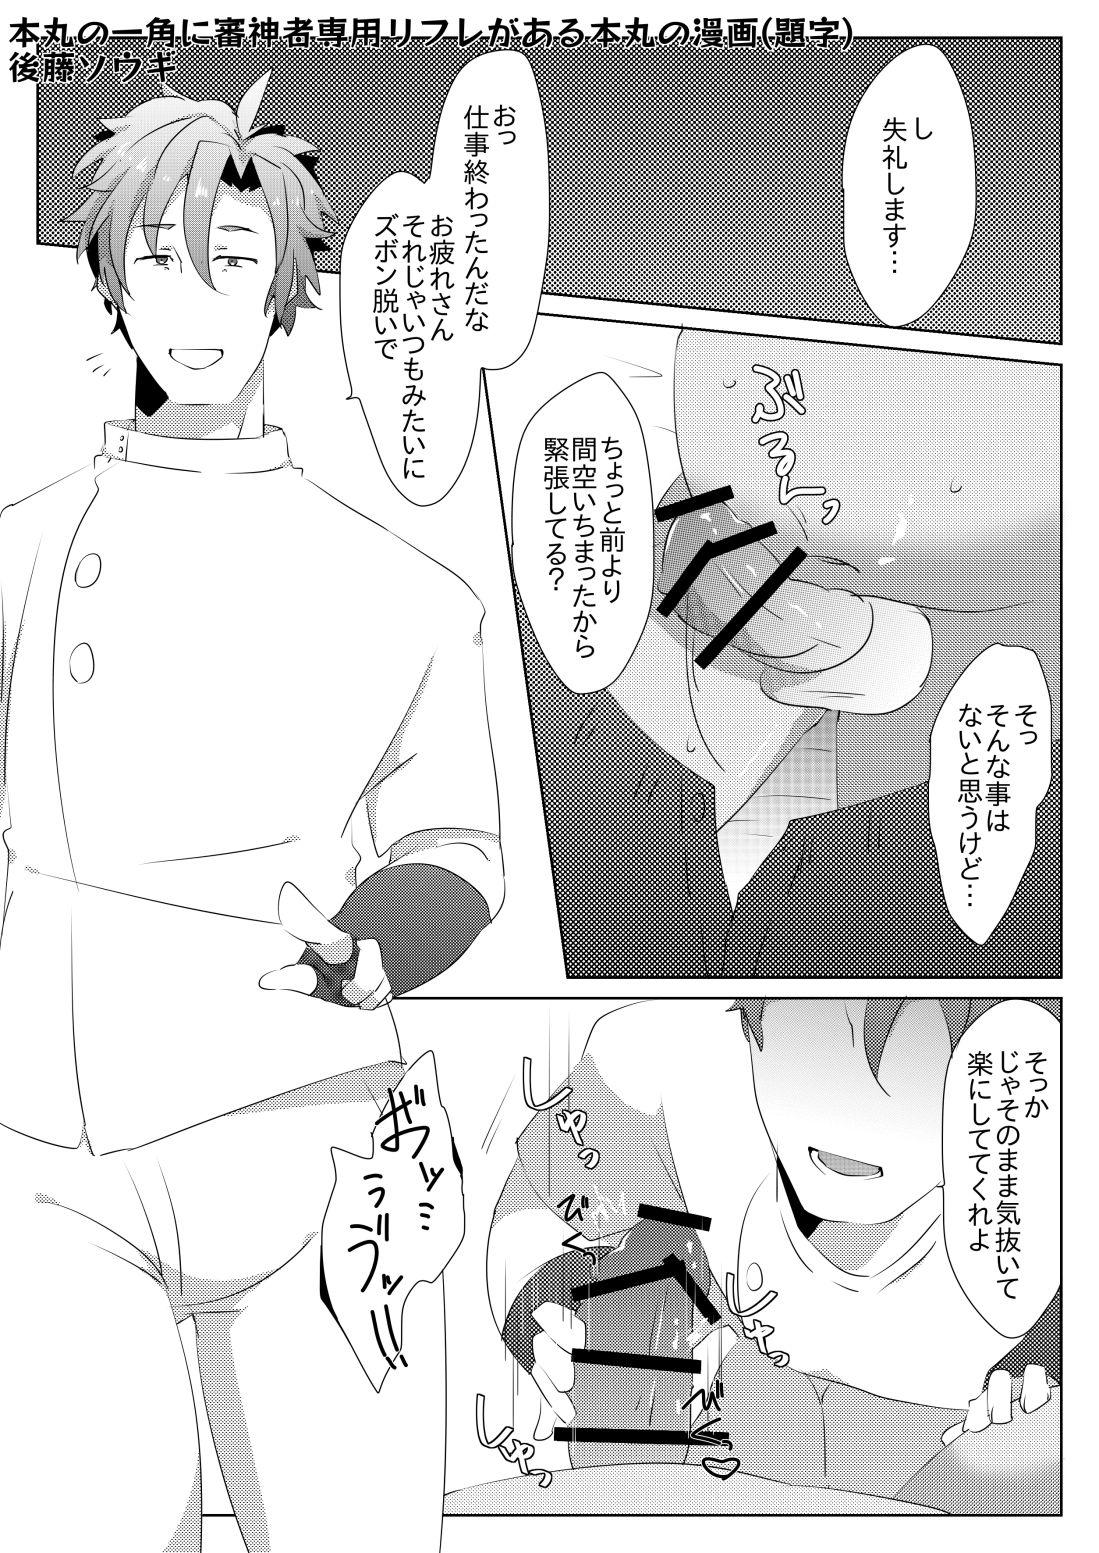 Art エア新刊出なかったごめん漫画 - Touken ranbu Action - Page 2